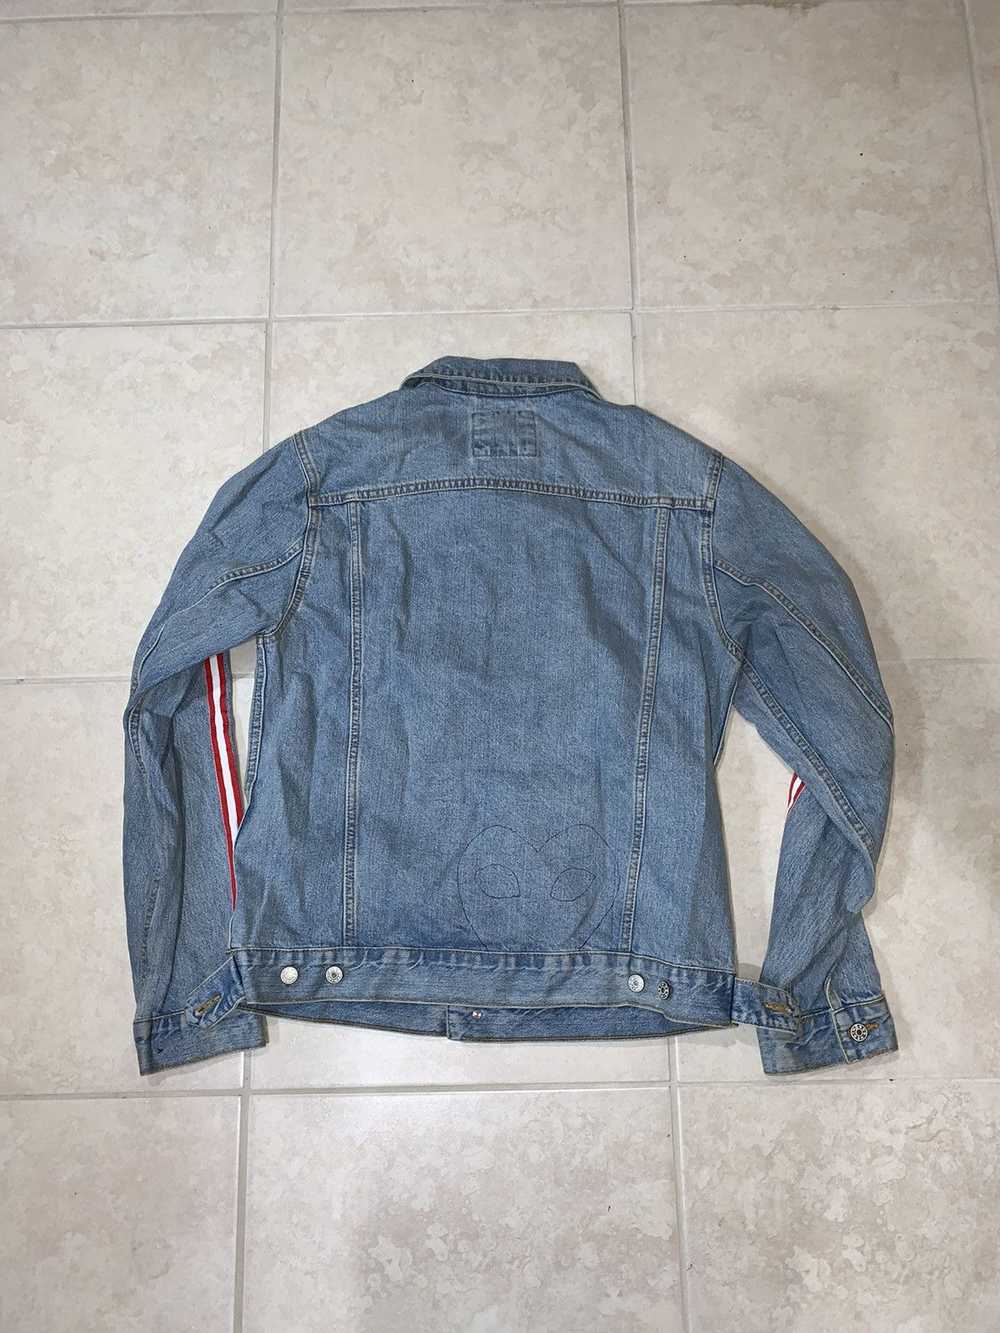 Bdg × Urban Outfitters BDG Pinstripe Denim Jacket - image 4